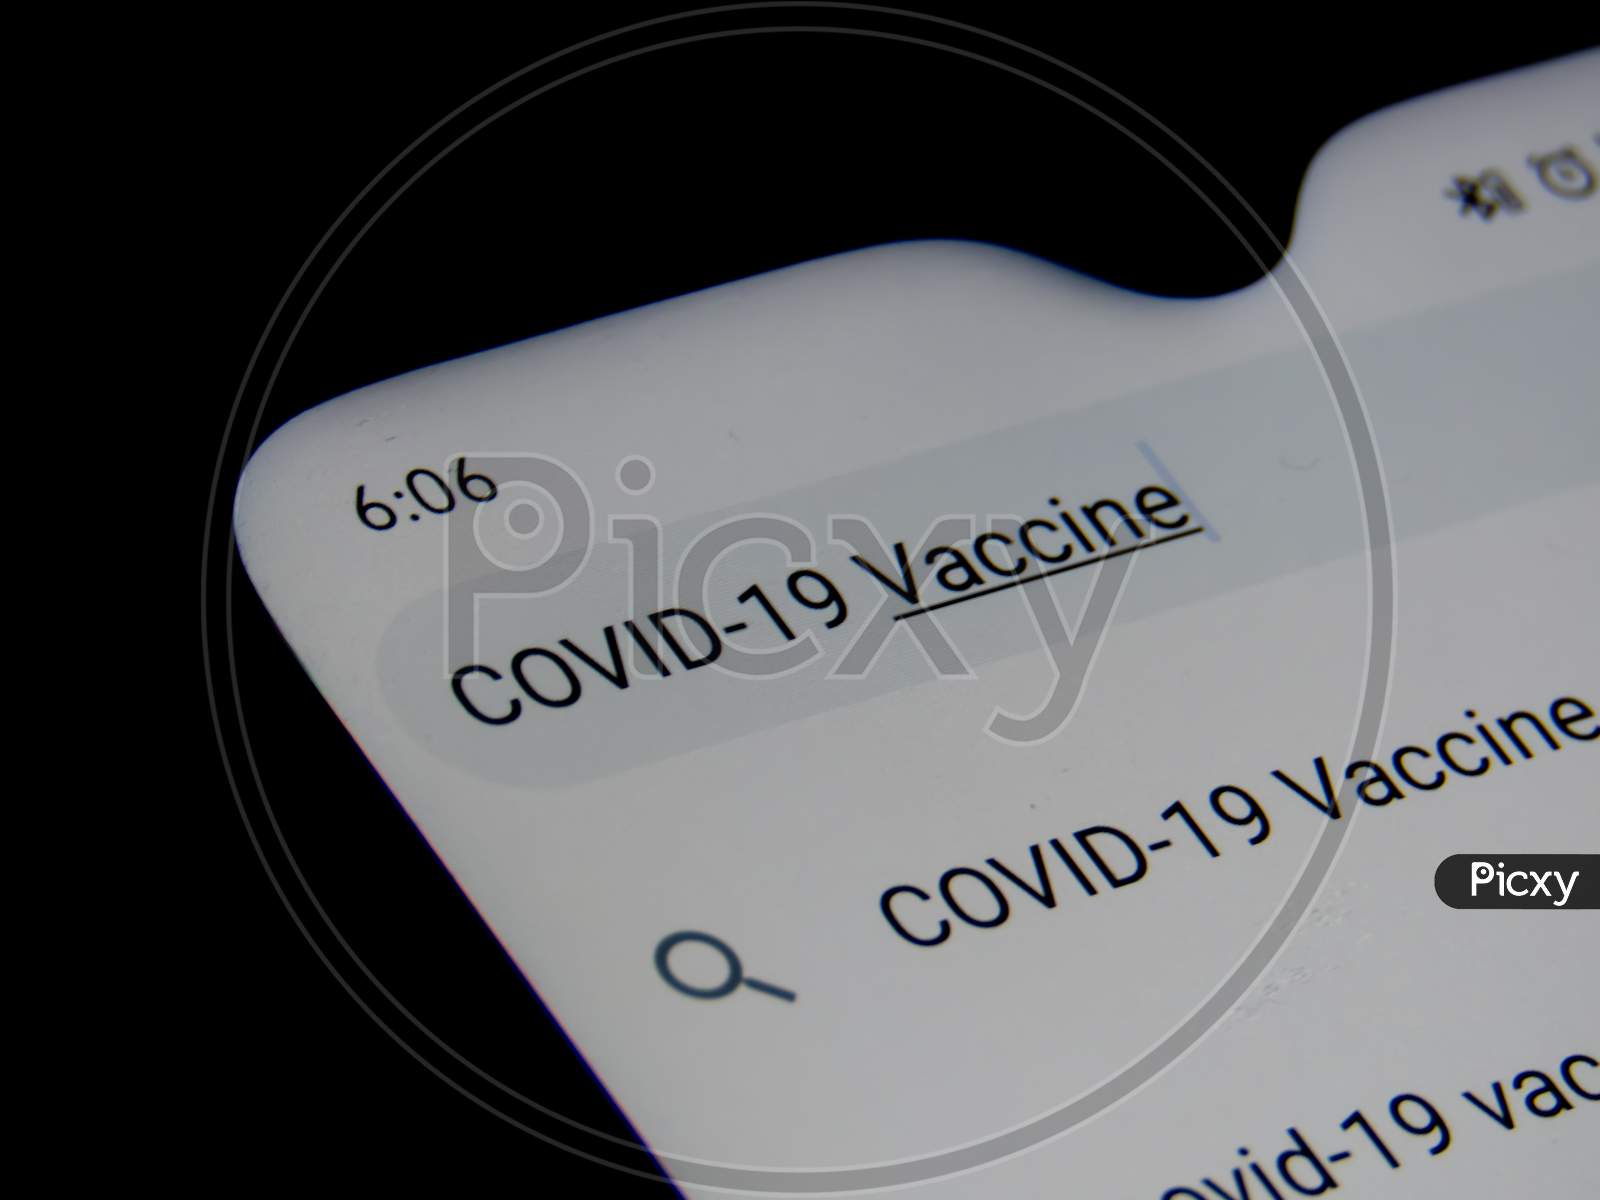 Searching Covid-19 Vaccine In Internate.